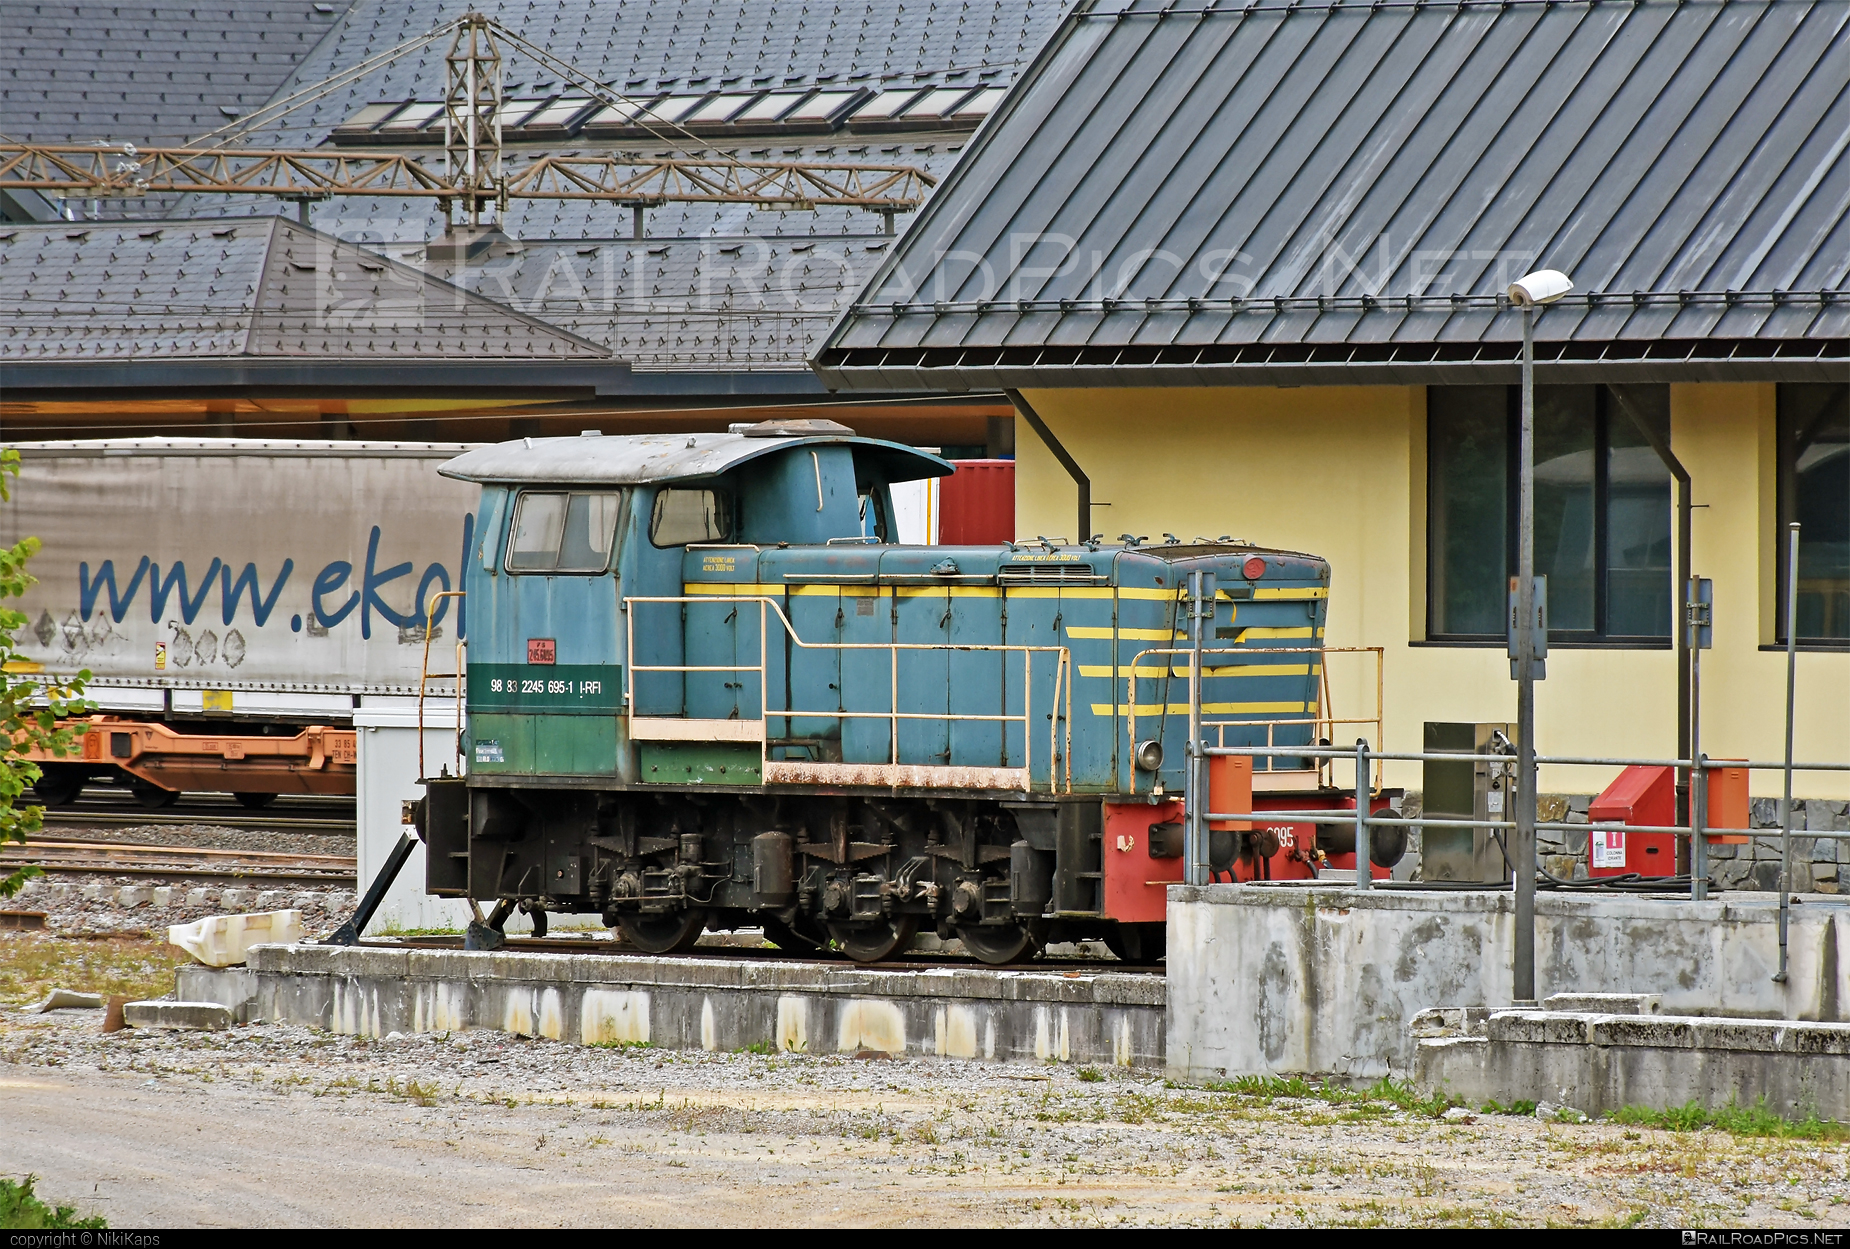 FS Class D.245 - D 245.6095 operated by Rete Ferroviaria Italiana #ReteFerroviariaItaliana #d245 #ferroviedellostato #fs #fsClassD245 #fsitaliane #rfi